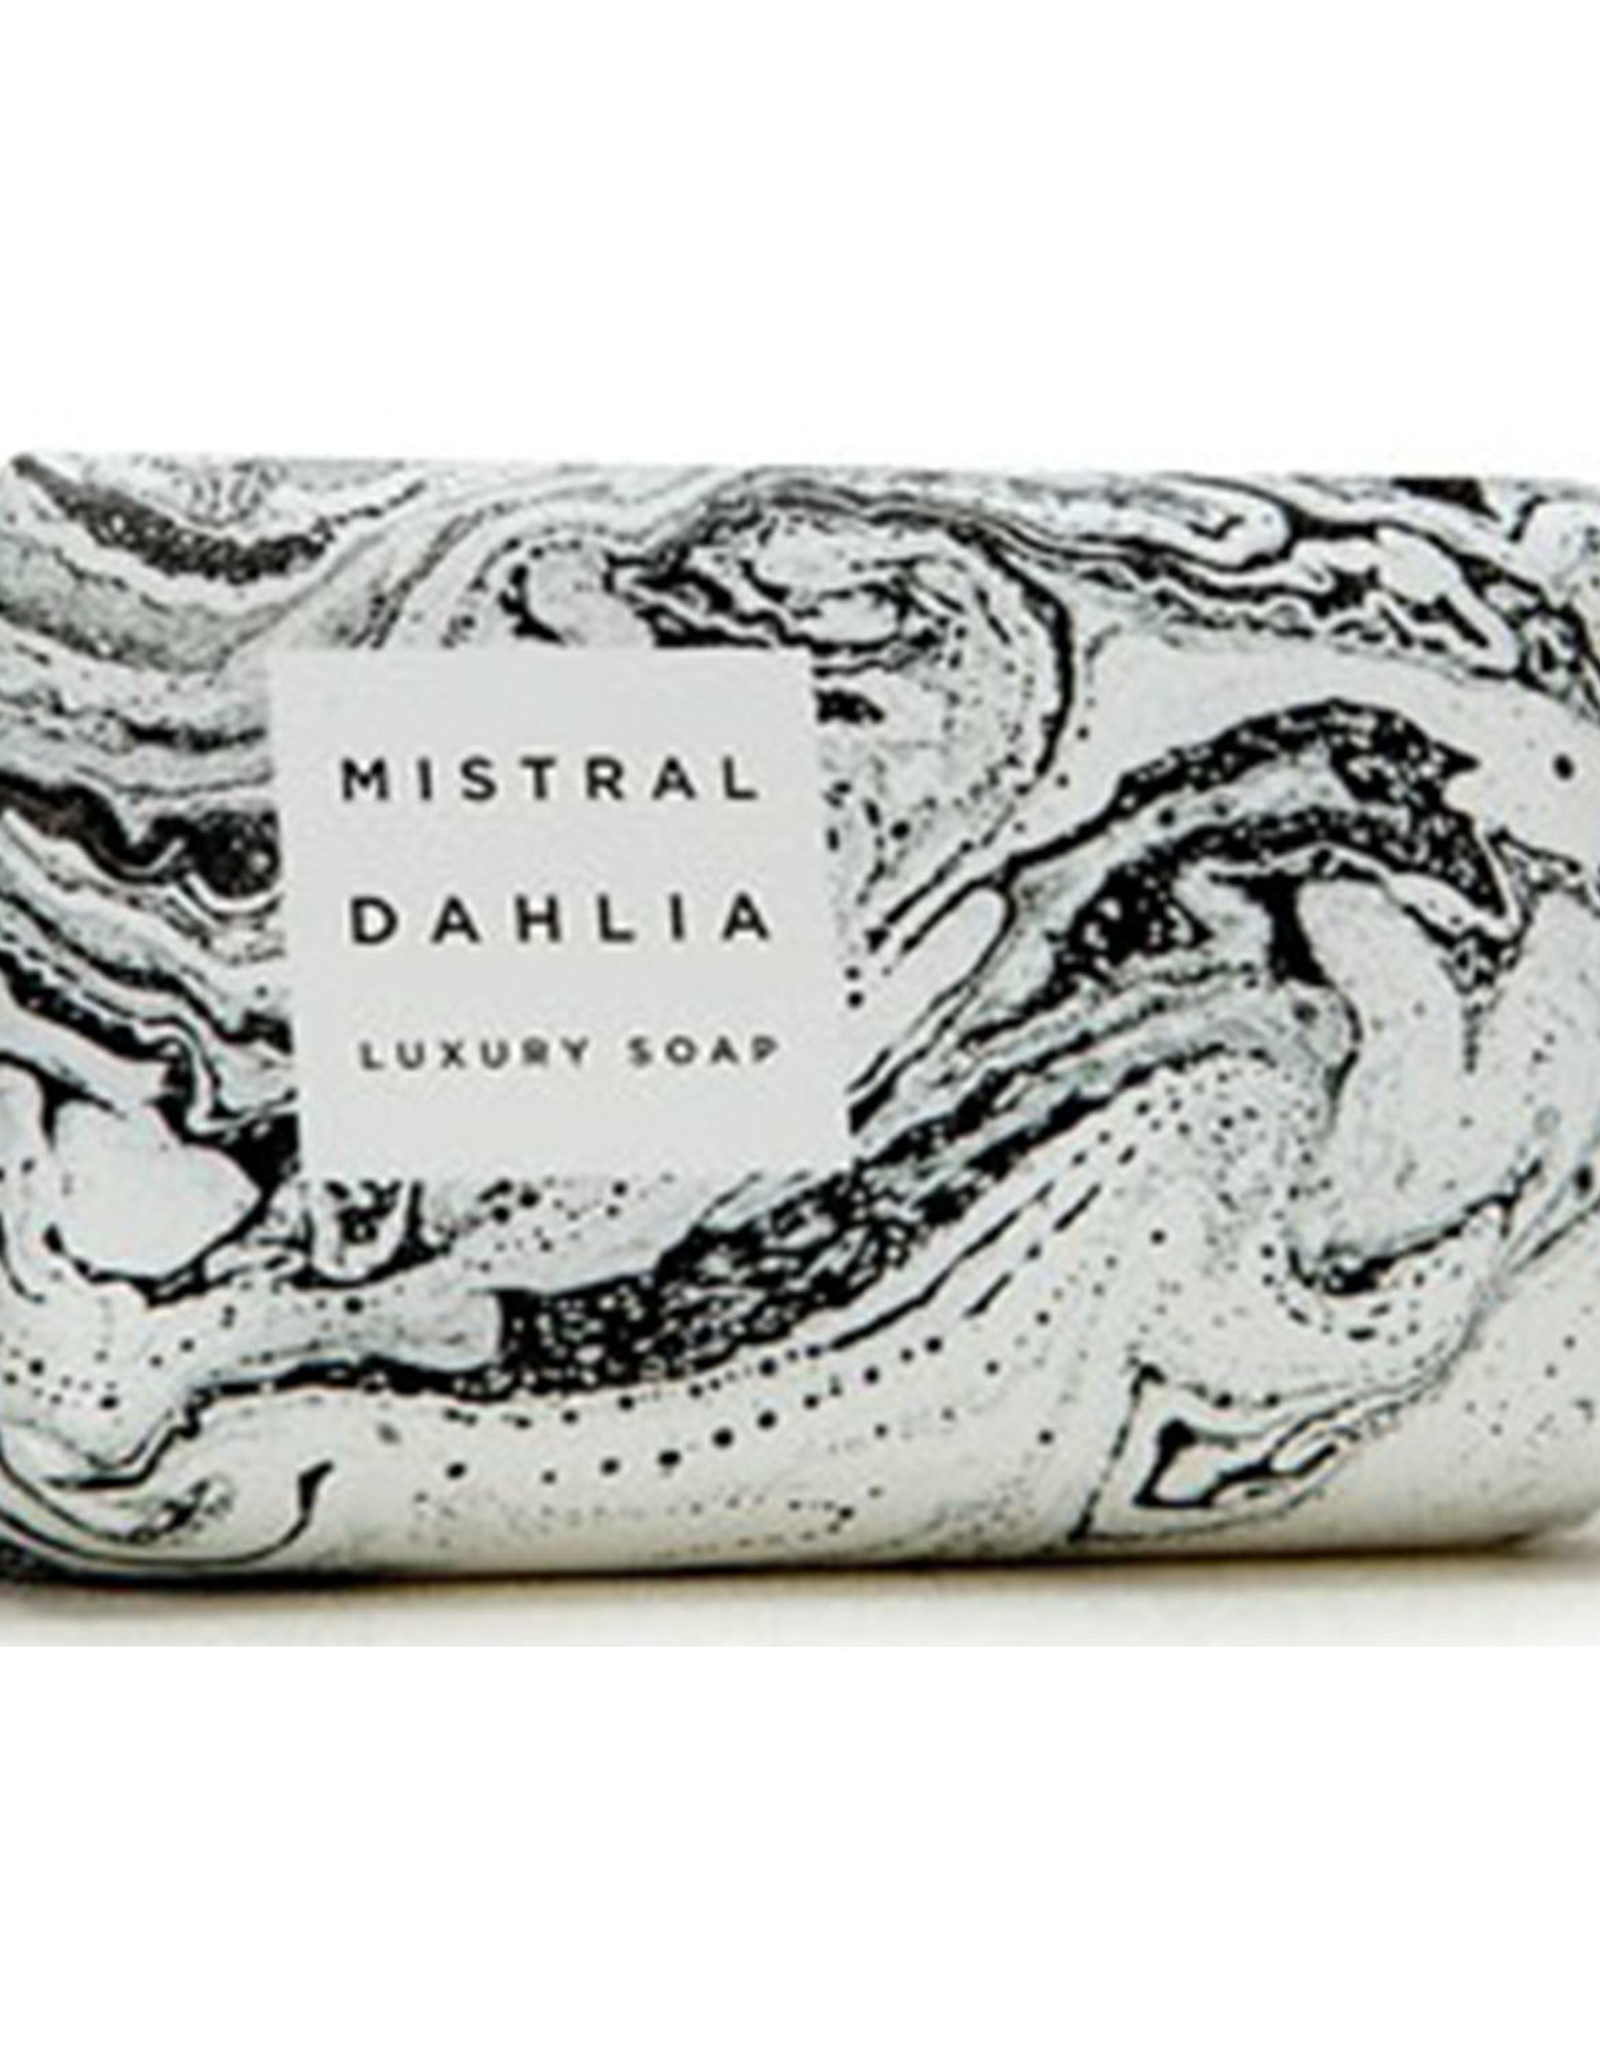 Dahlia - Mistral Marbles Collection Soap - 7 oz